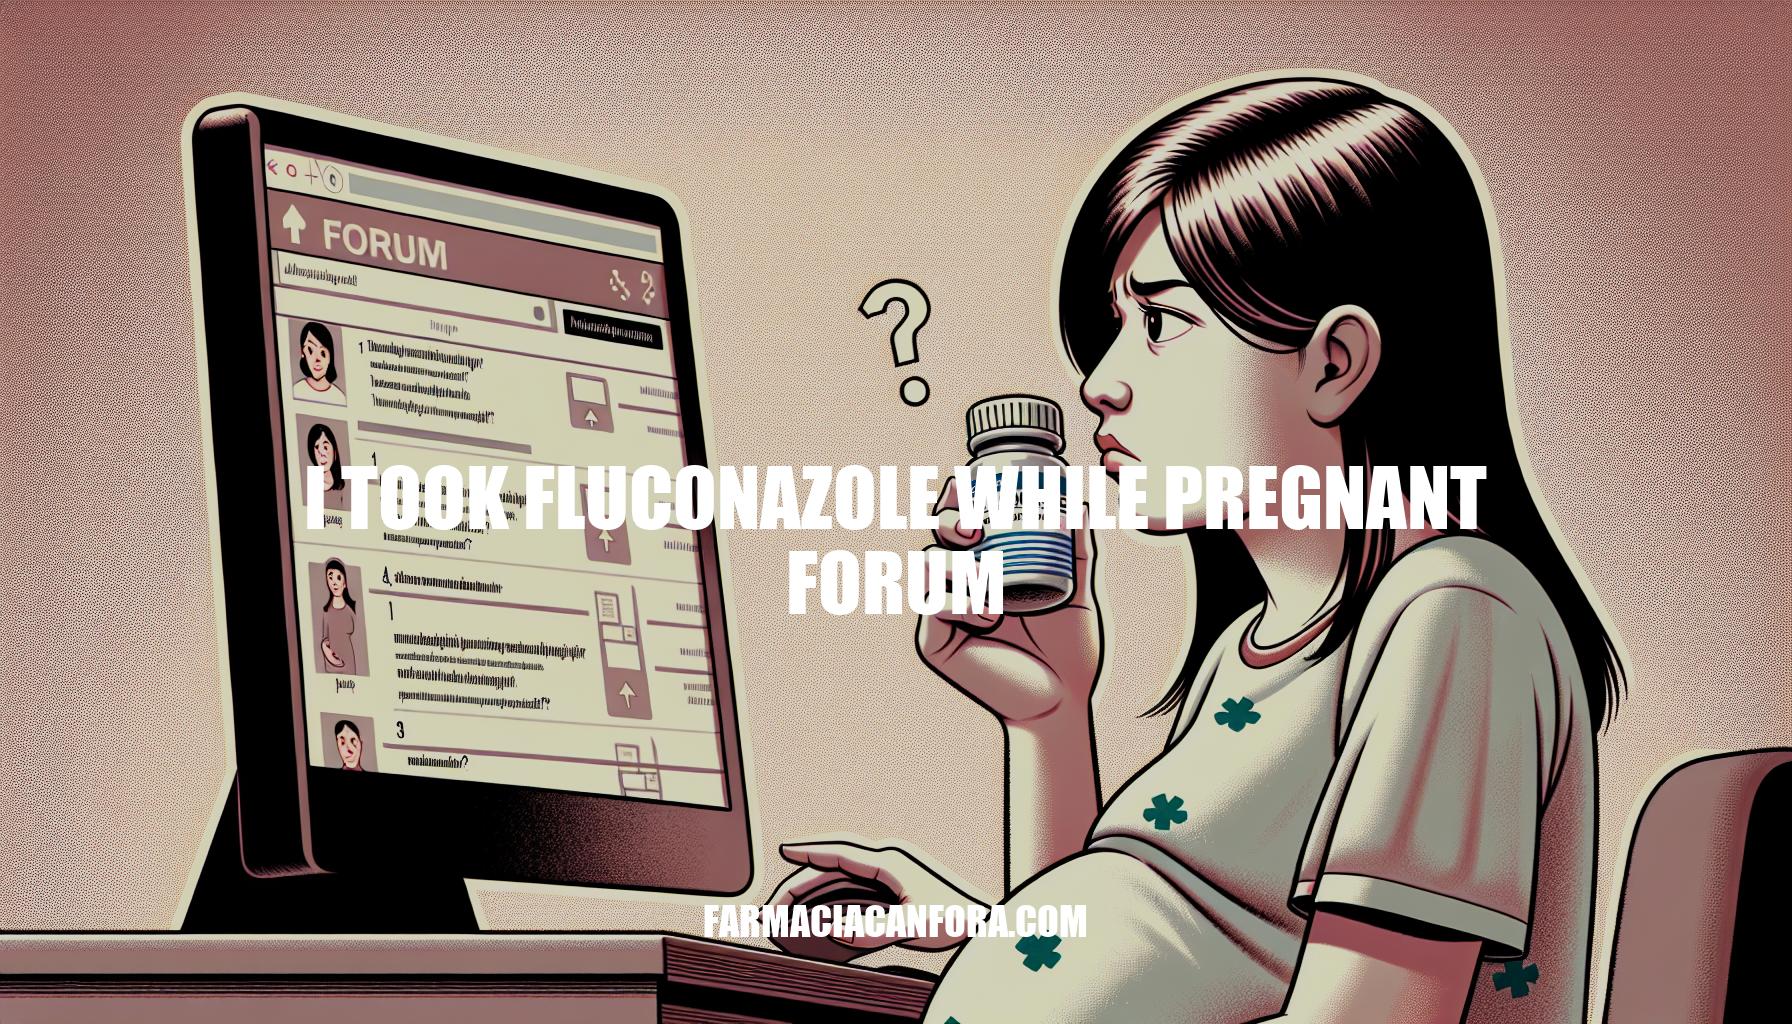 Taking Fluconazole While Pregnant: Forum Insights